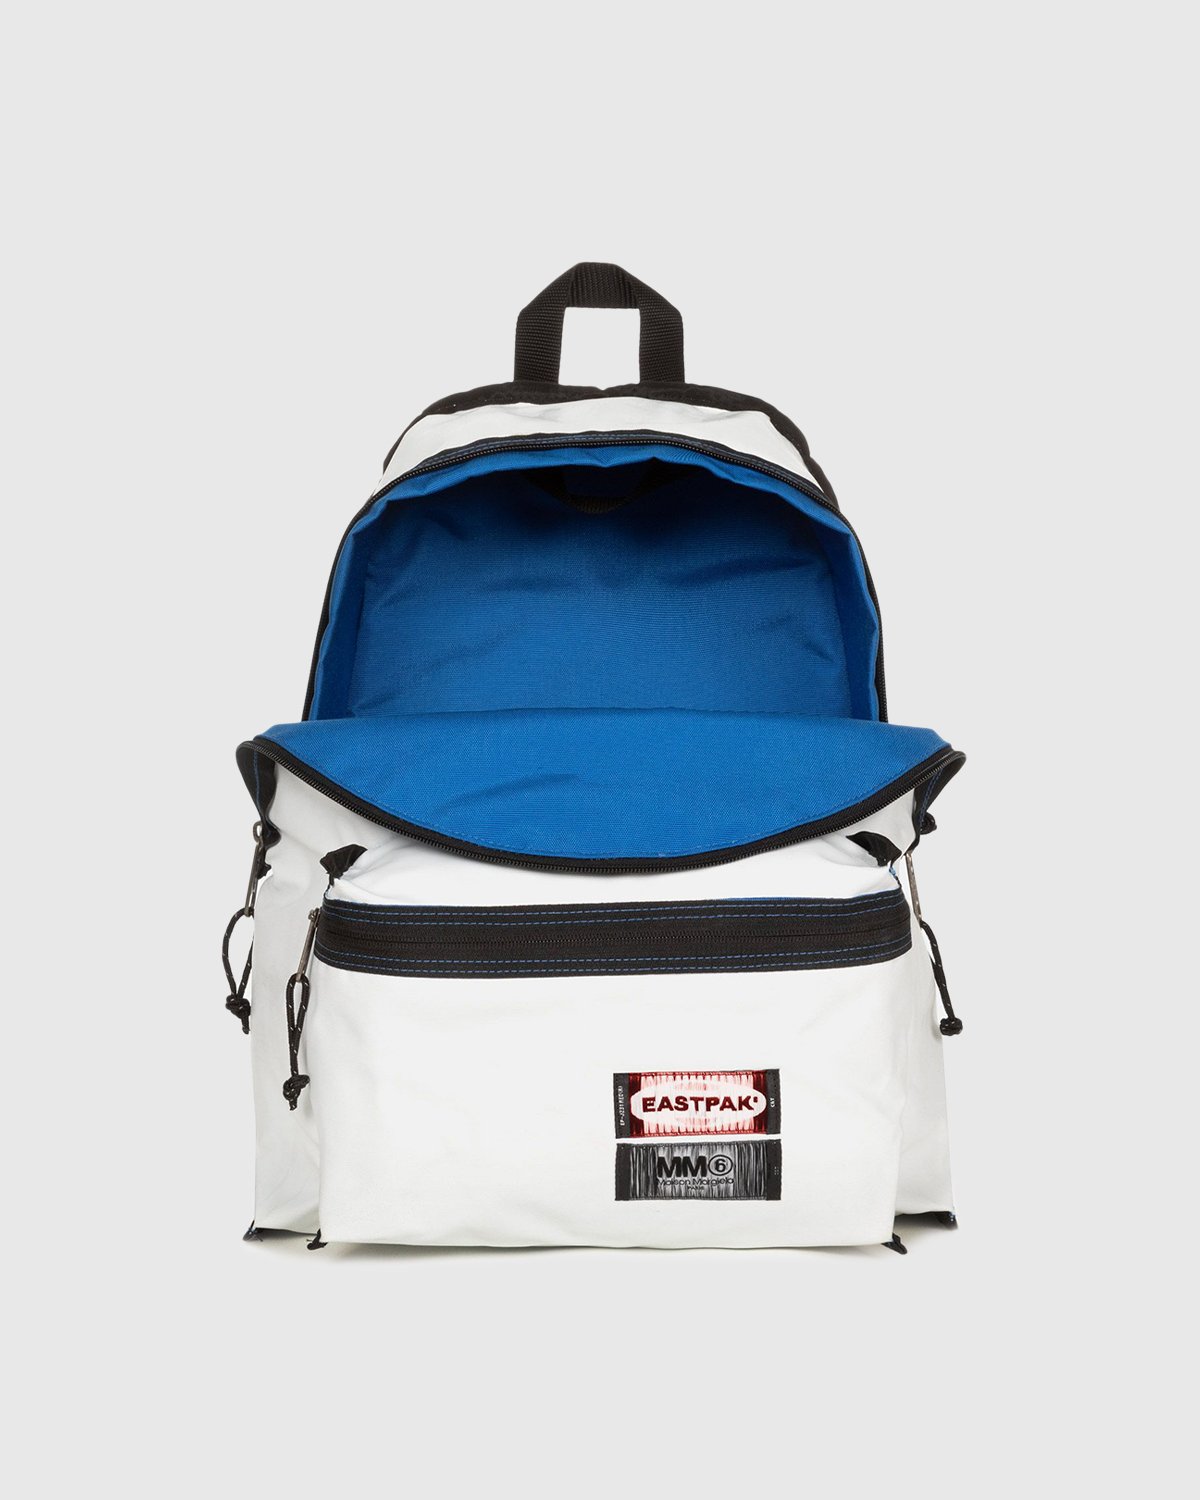 MM6 Maison Margiela x Eastpak - Padded Backpack Dazzling Blue - Accessories - Blue - Image 4